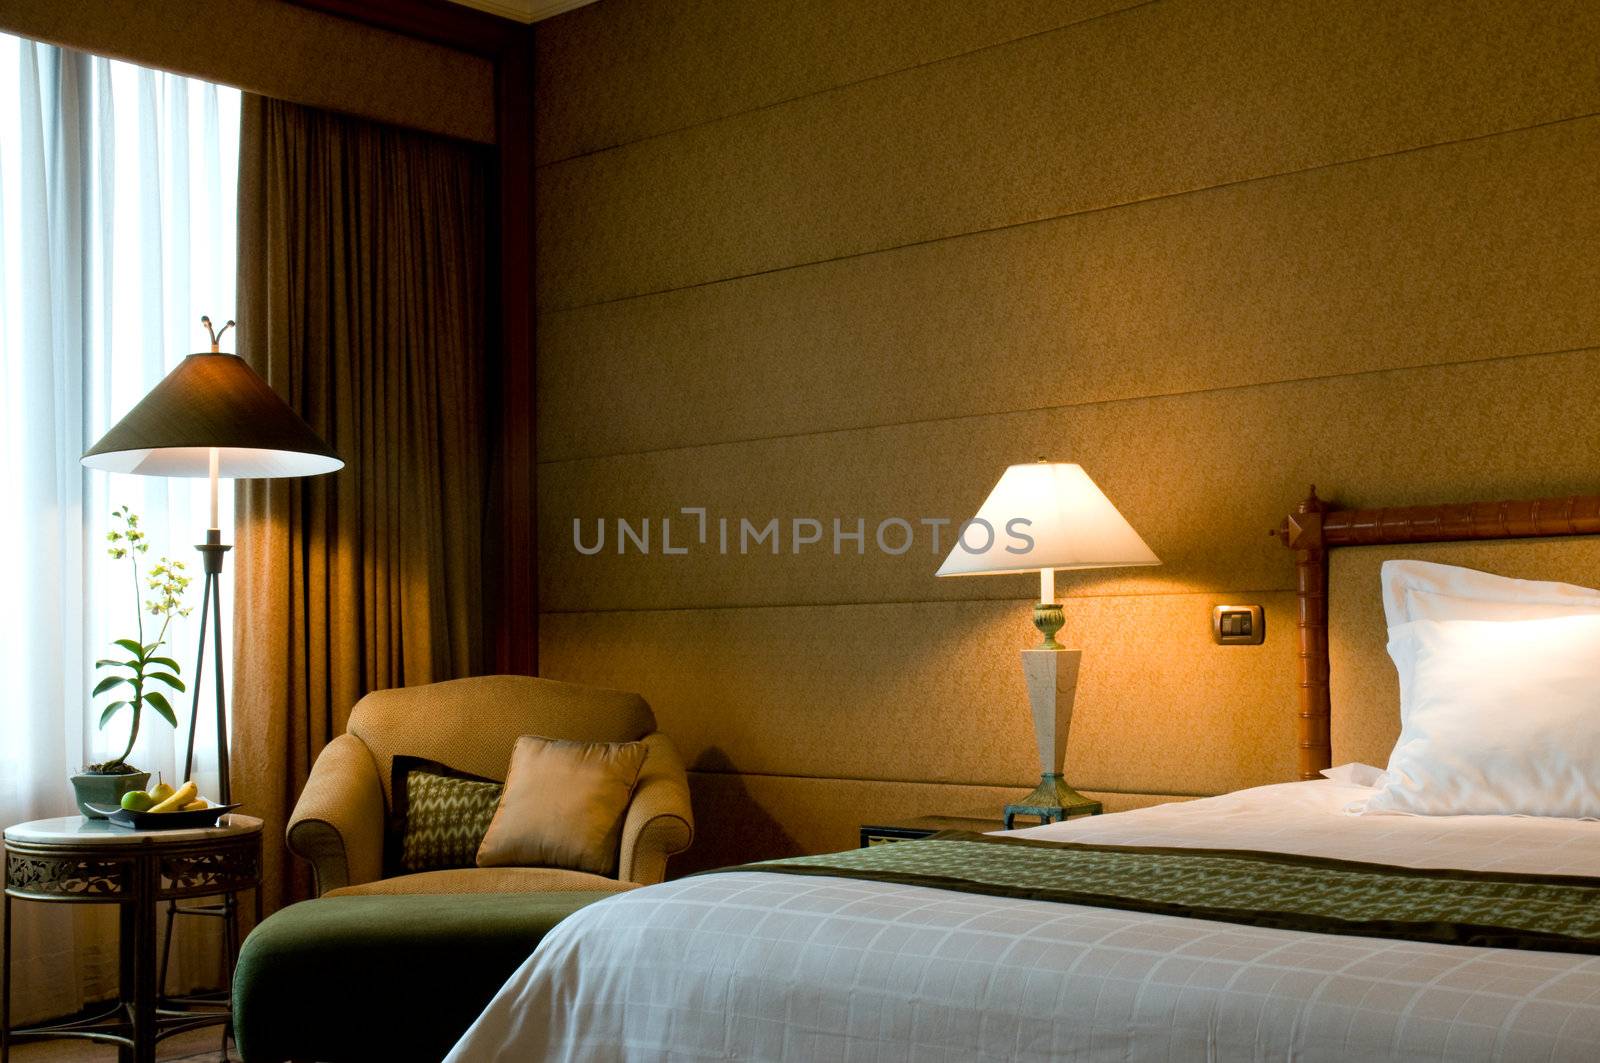 Bedroom of a elegant 5 star hotel by 3523Studio